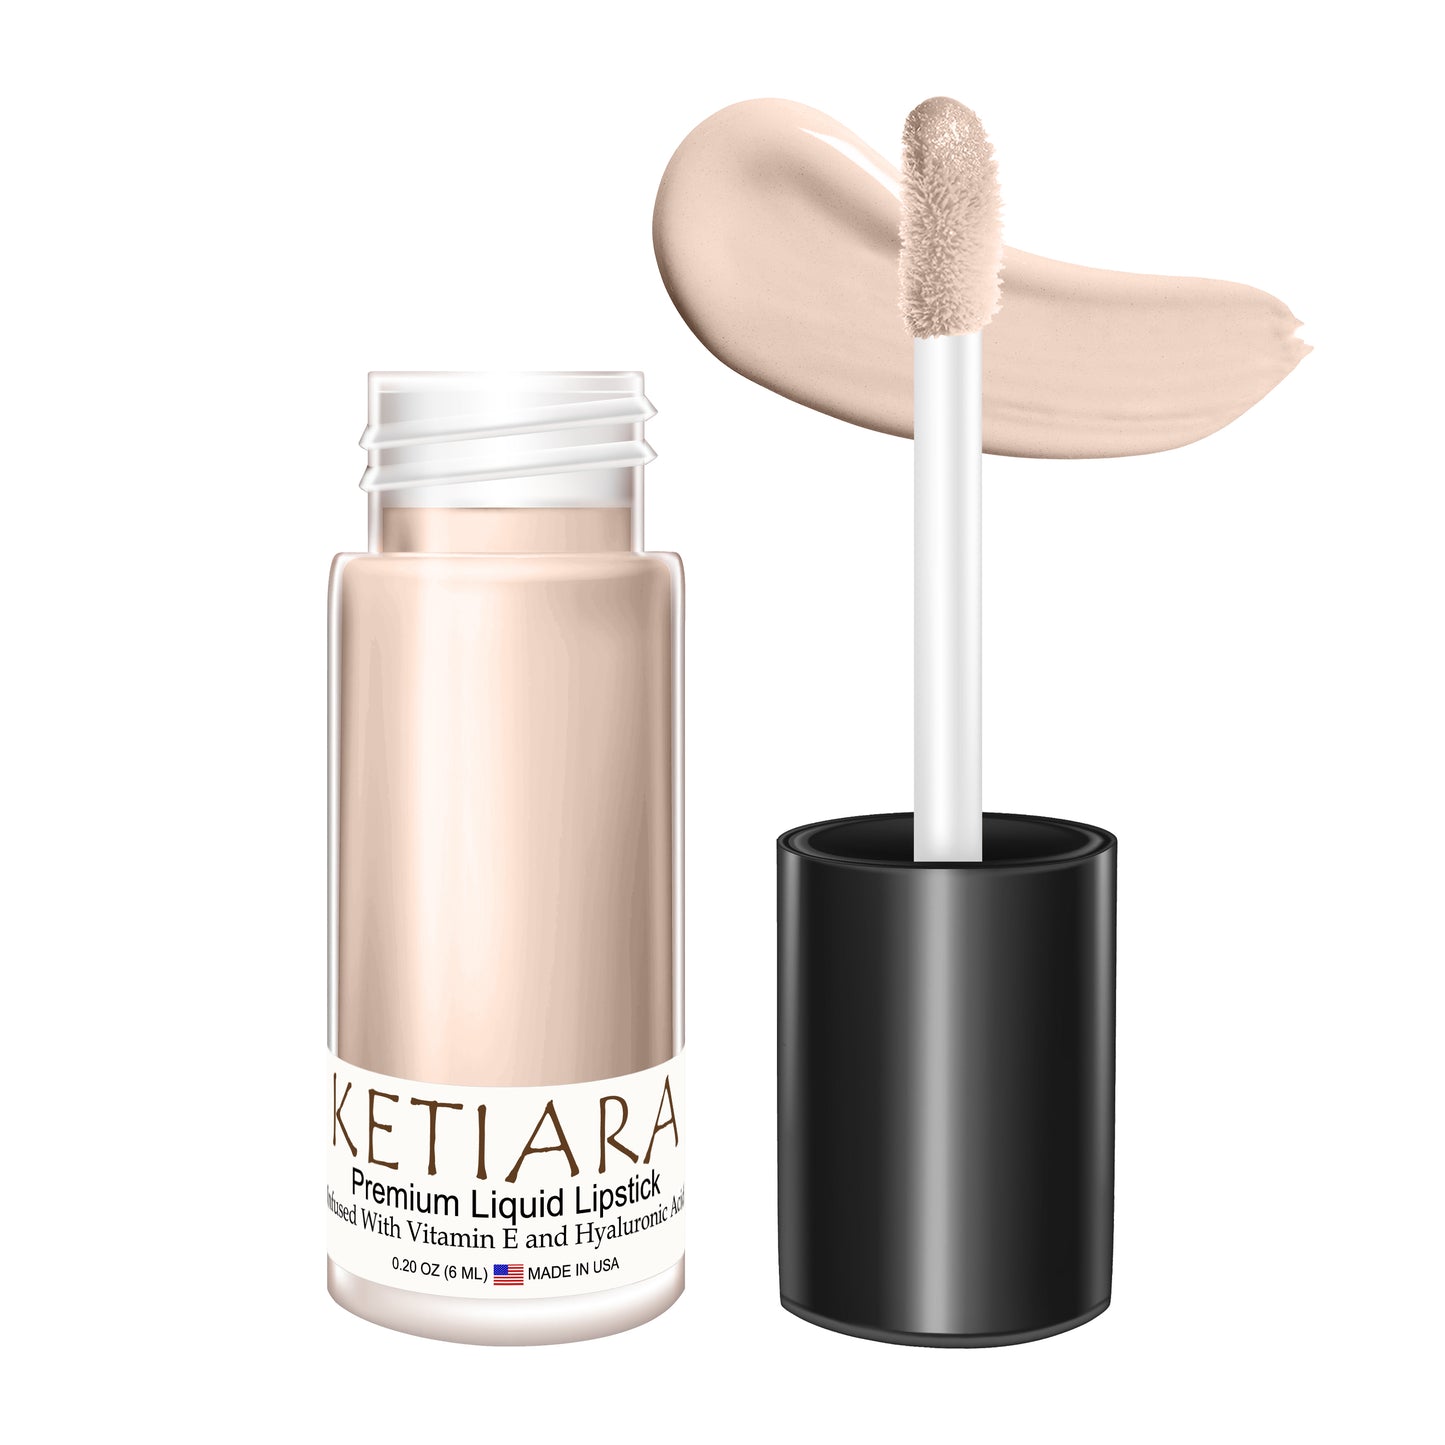 Ketiara Premium Full Coverage Big Brush Cinnamon Roll Liquid Lipstick Infused With Hyaluronic Acid, 6 ml